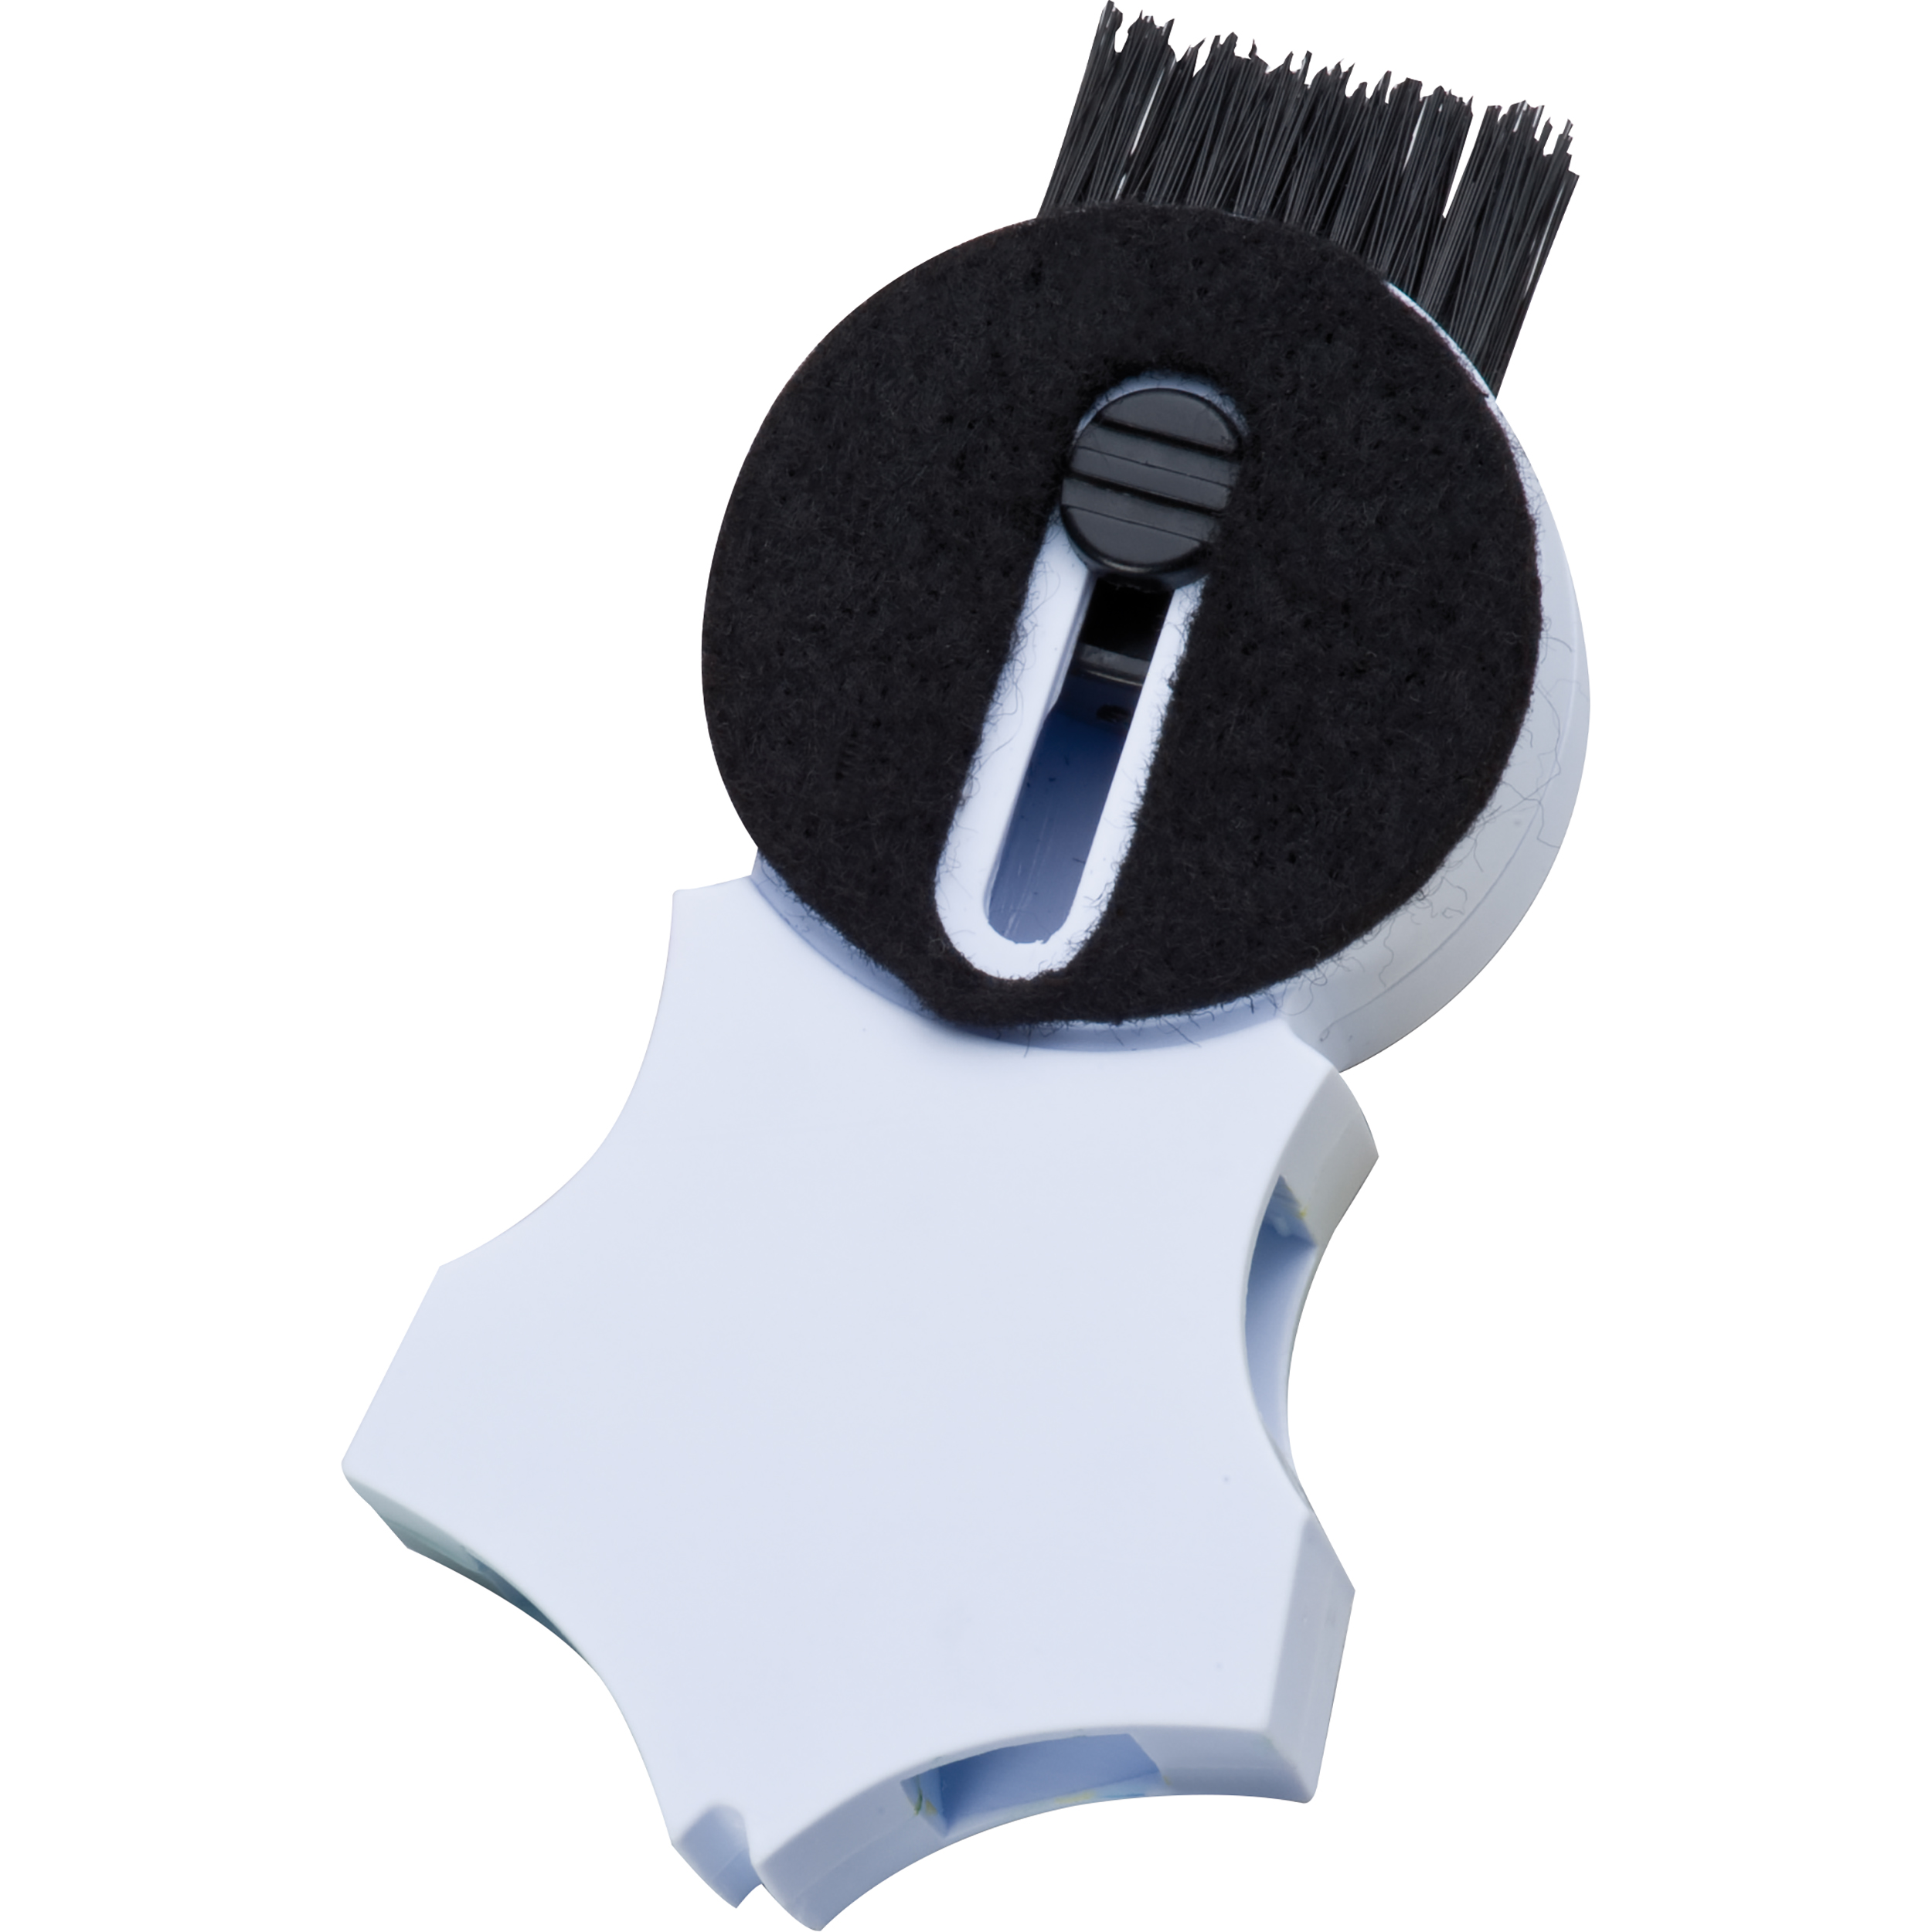 Highlighter manikin with keypad brush